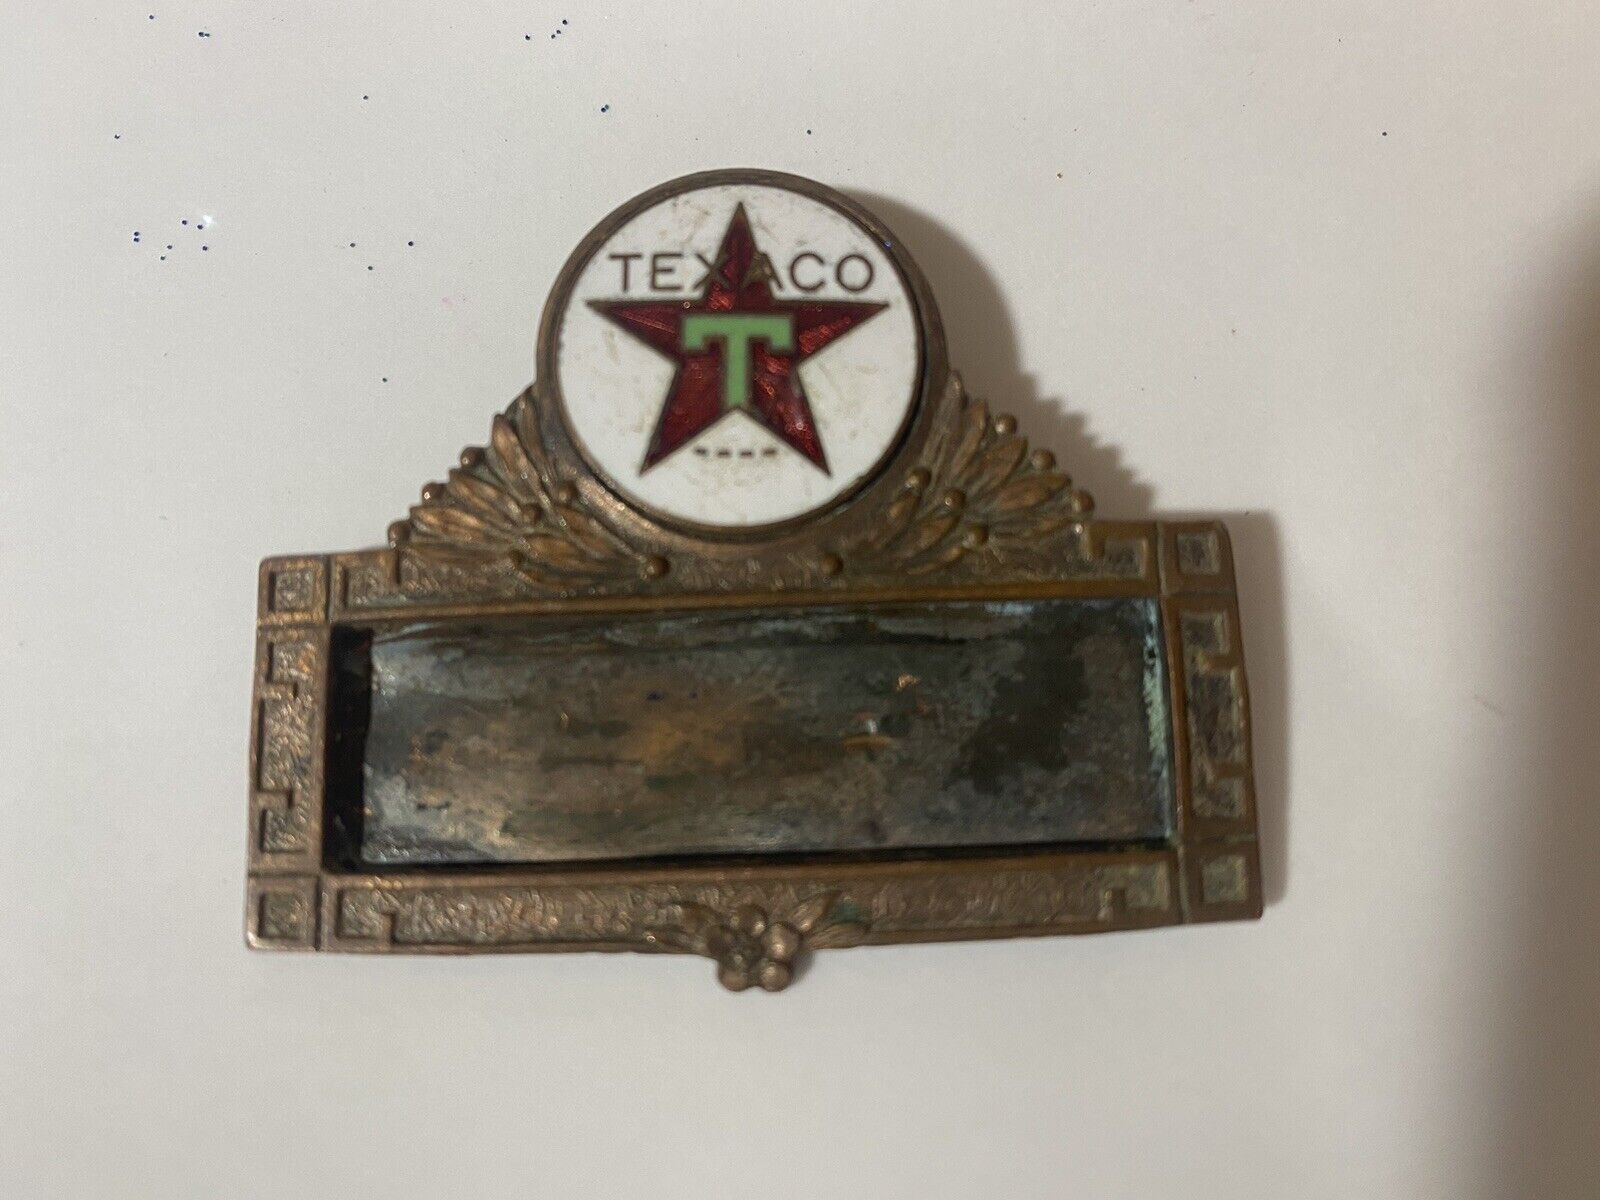 Antique Texaco Gas Station Attendant Name Badge Pin Advertising Collectible USA